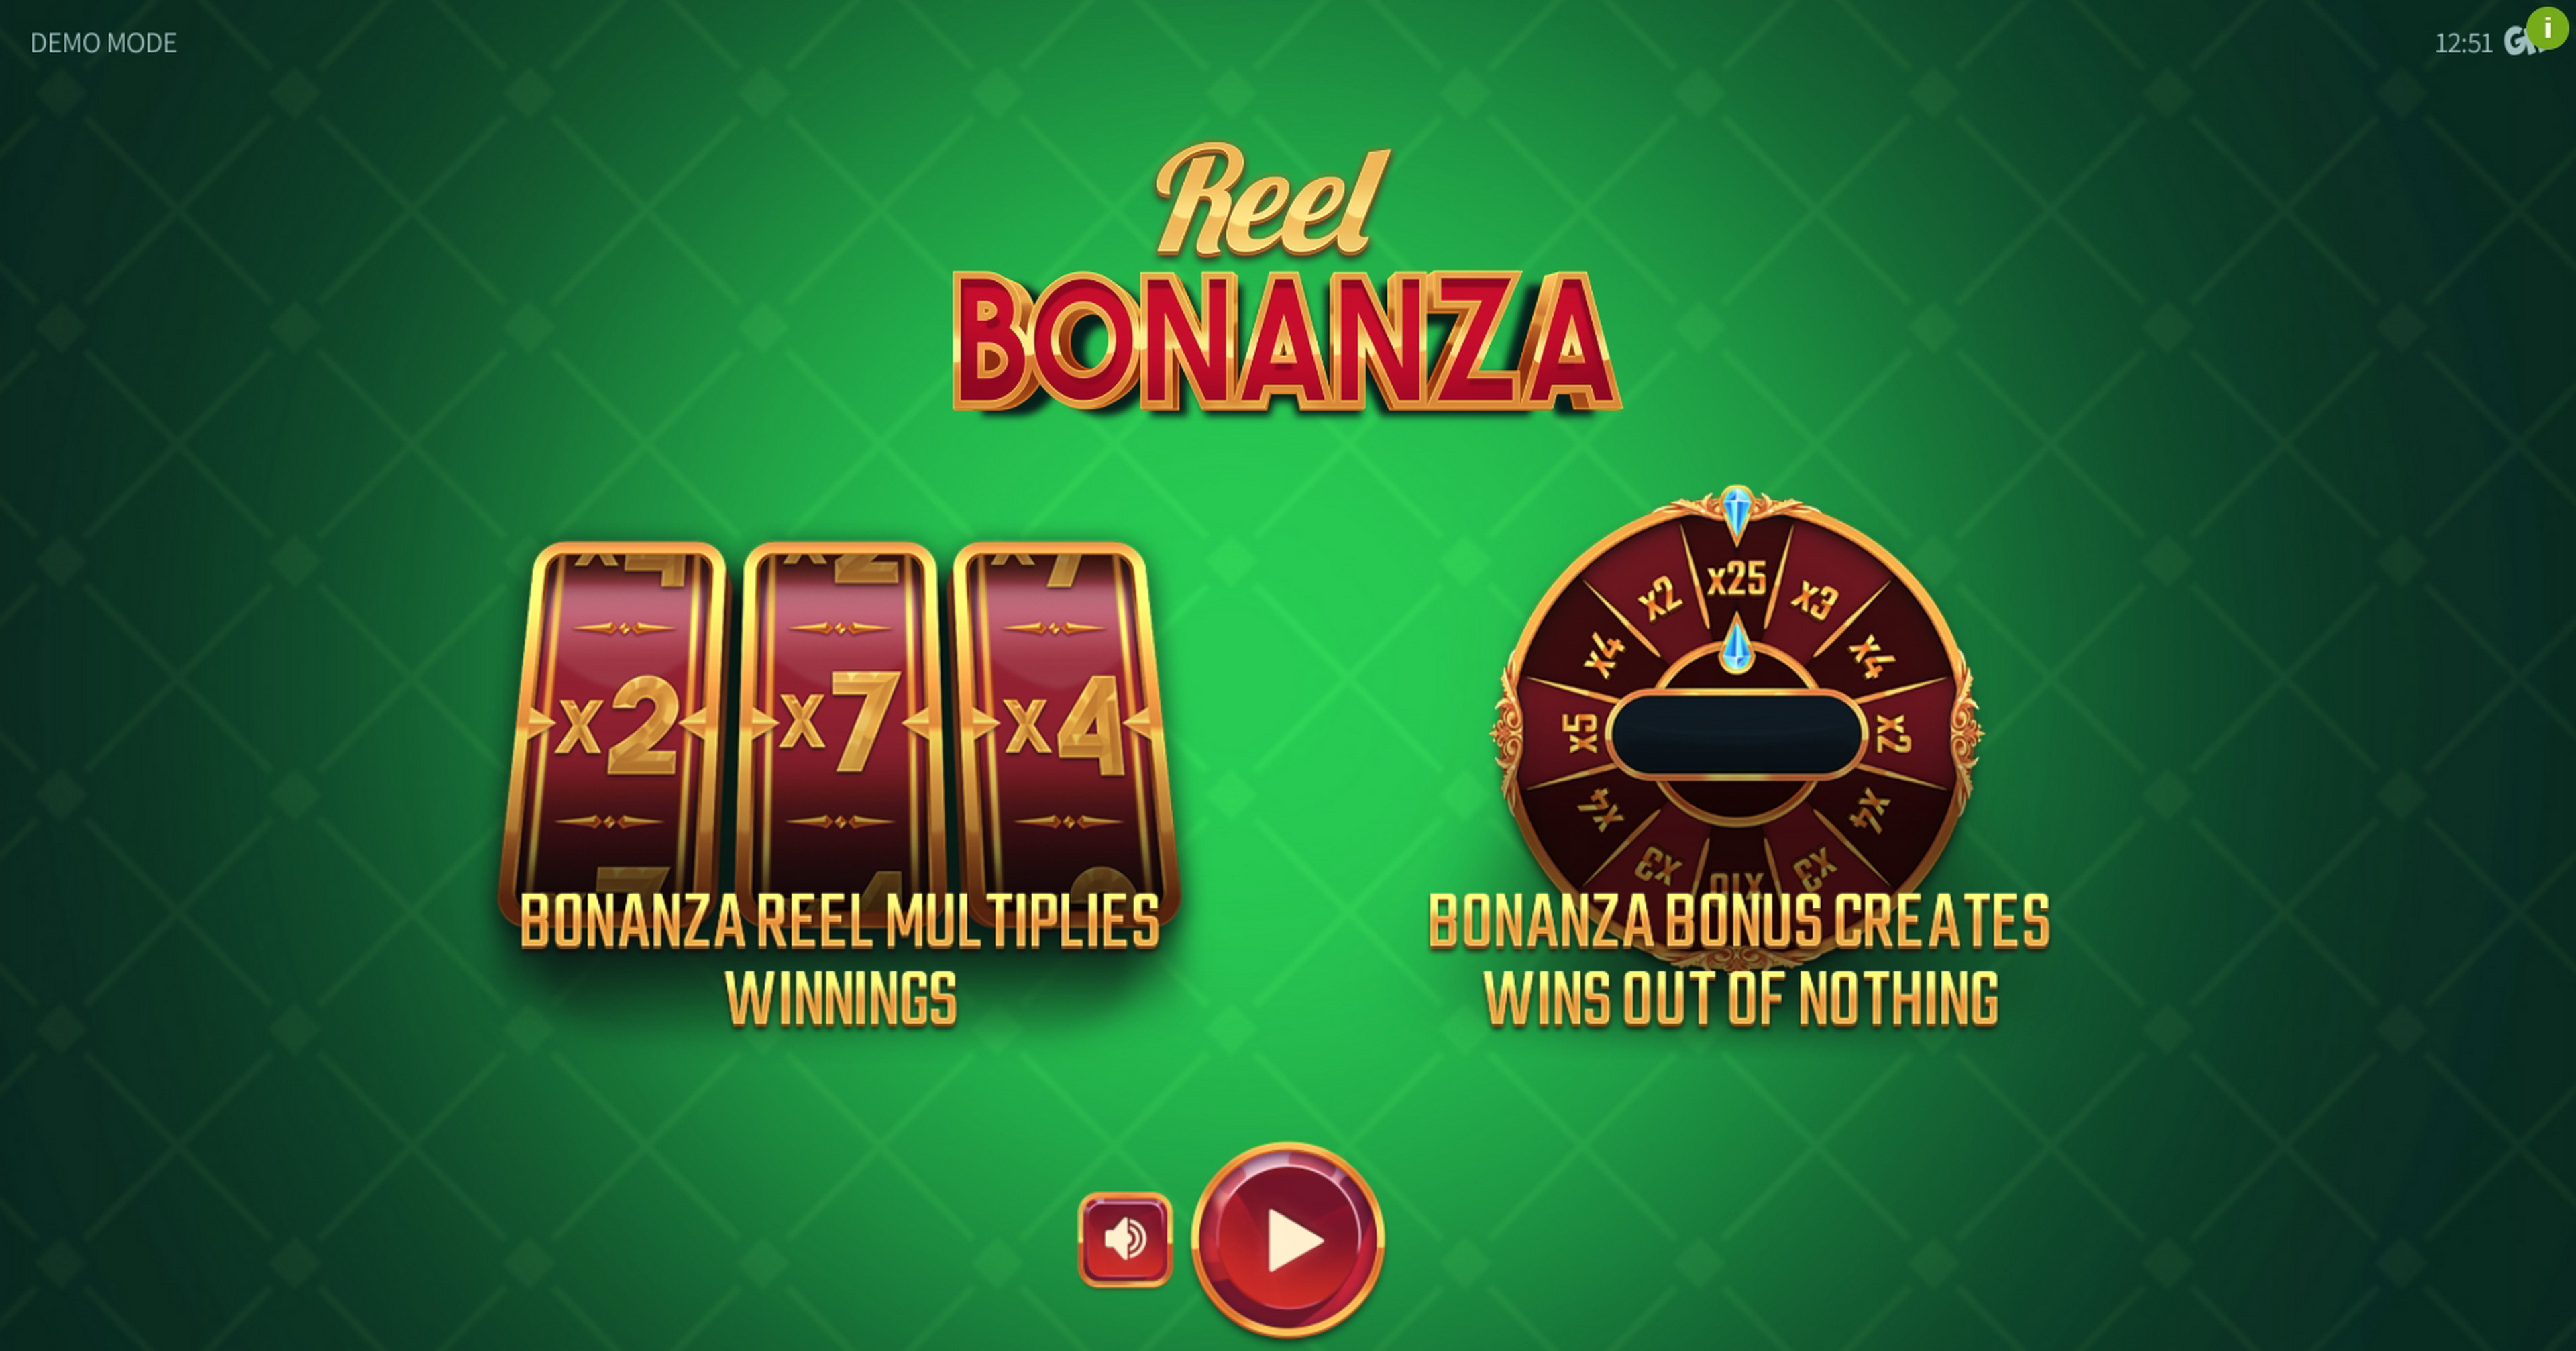 Play Reel Bonanza Free Casino Slot Game by Golden Hero